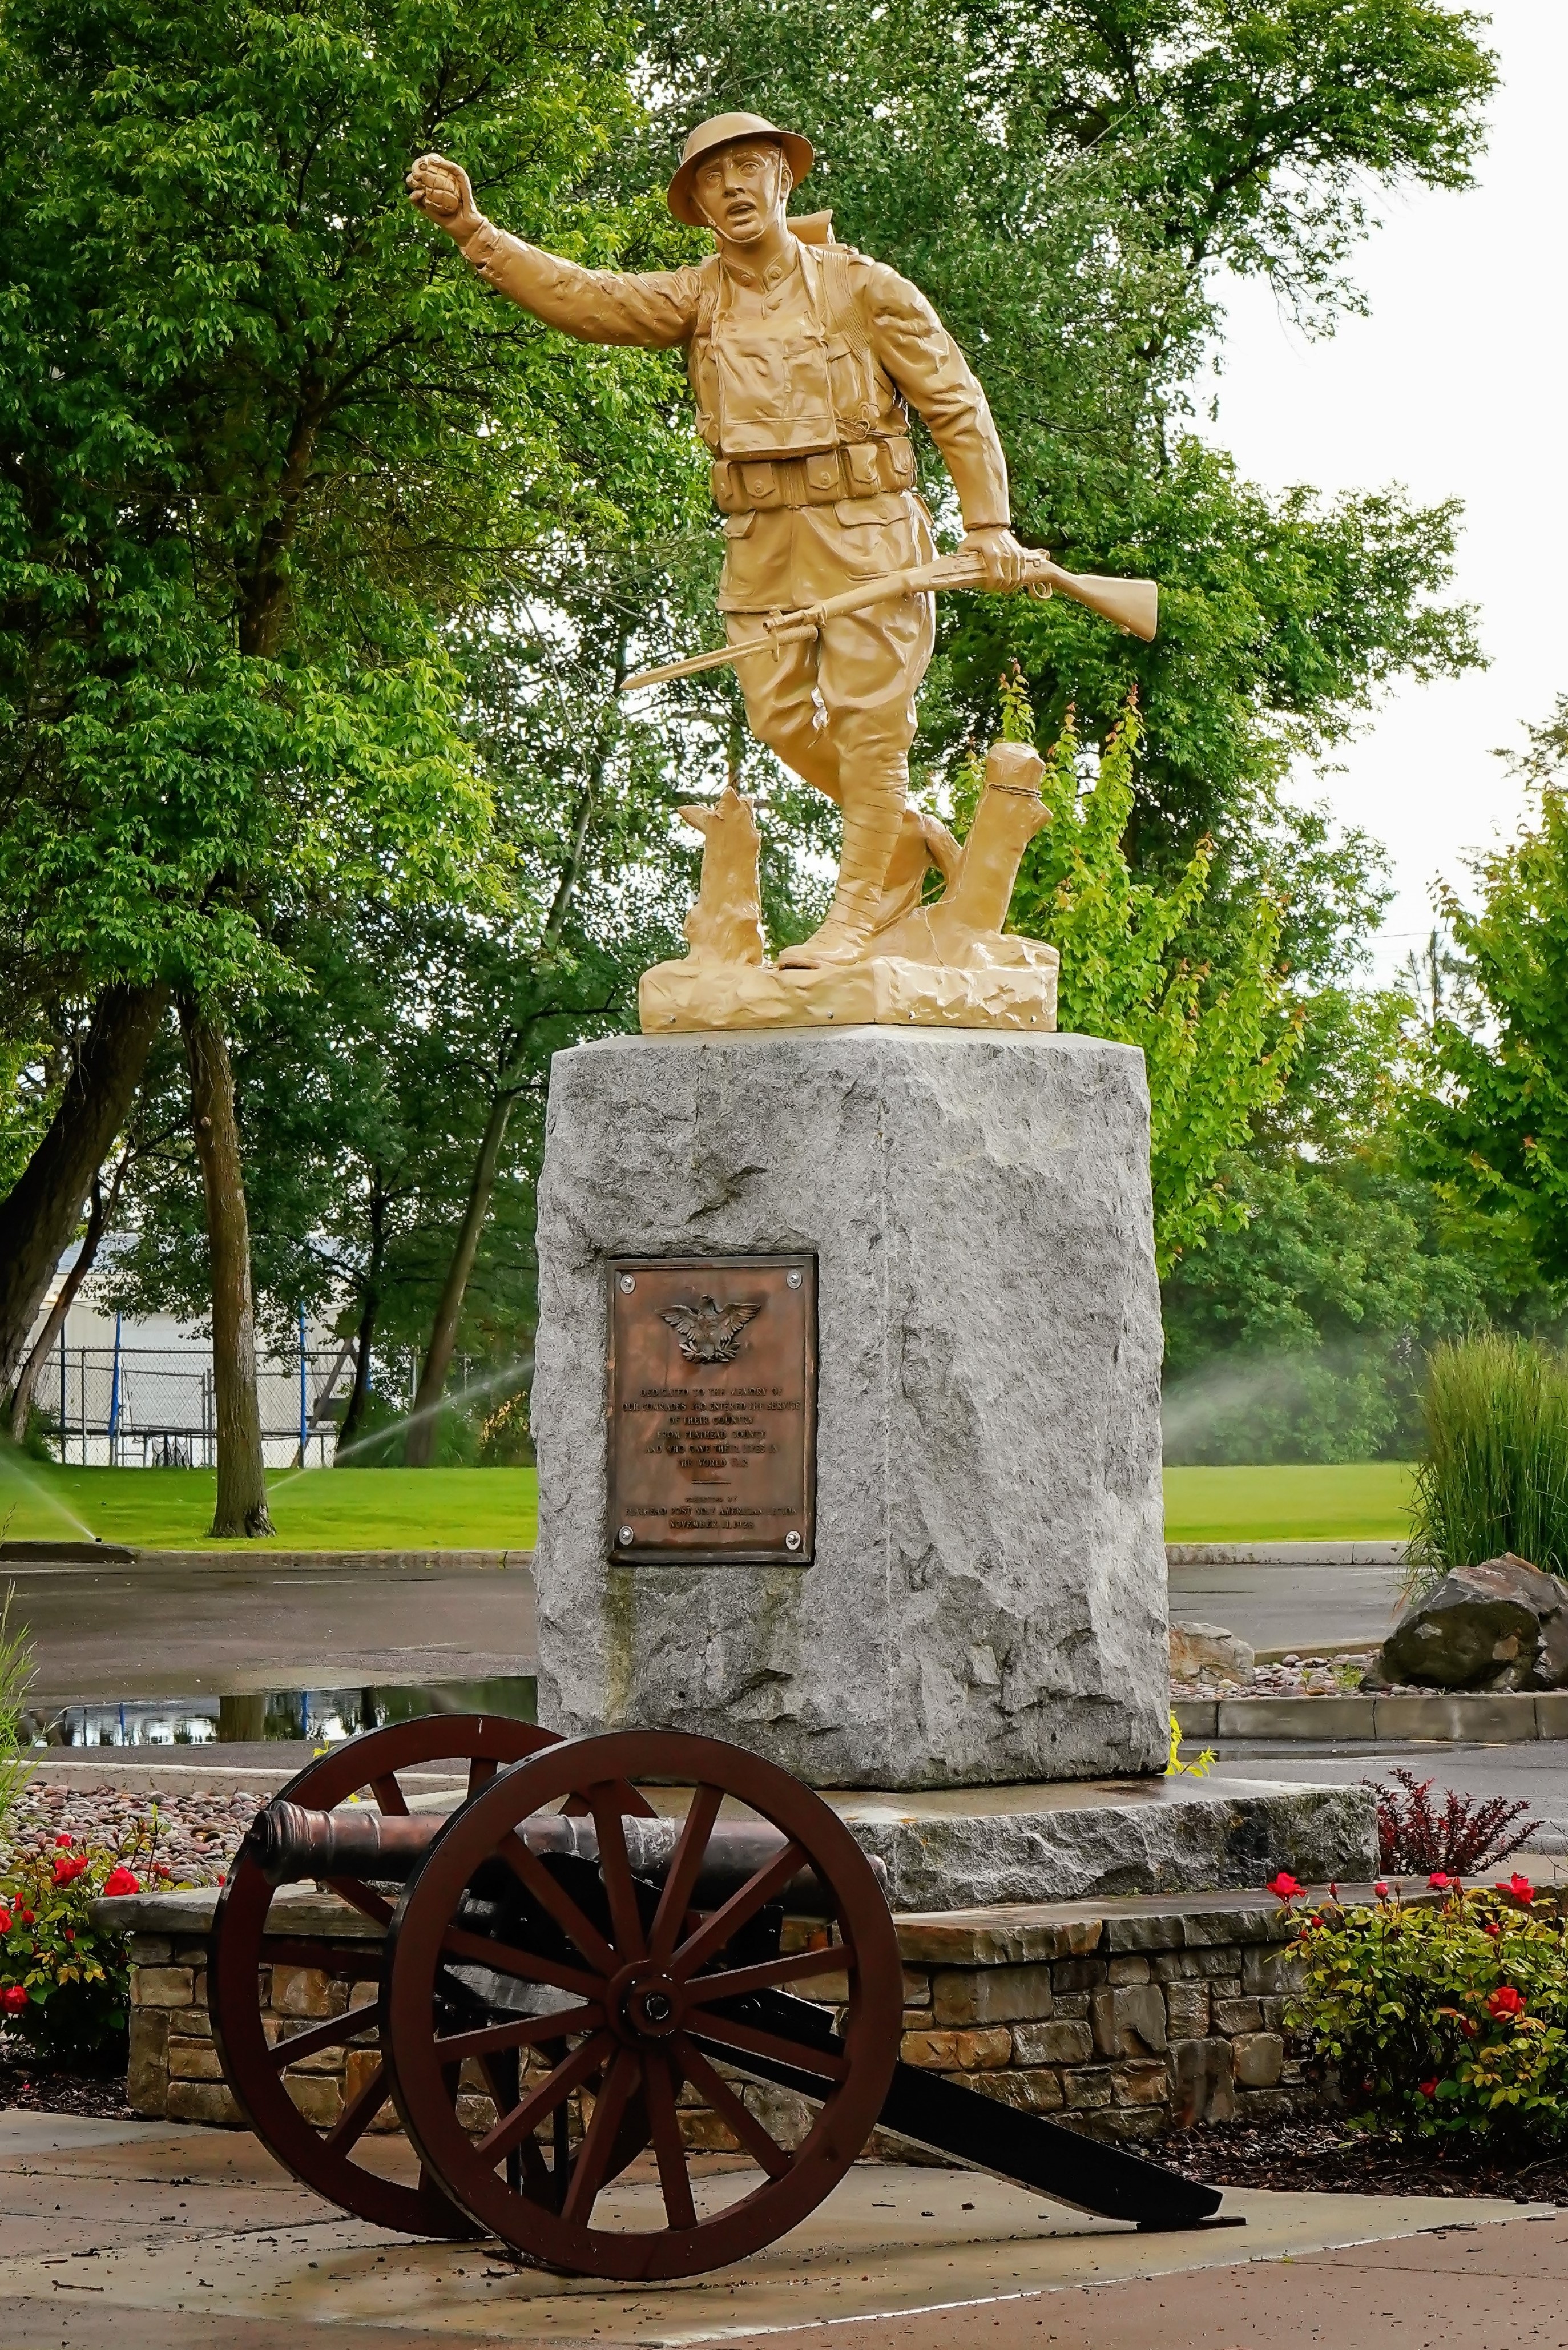 A picture of a golden veteran’s statute